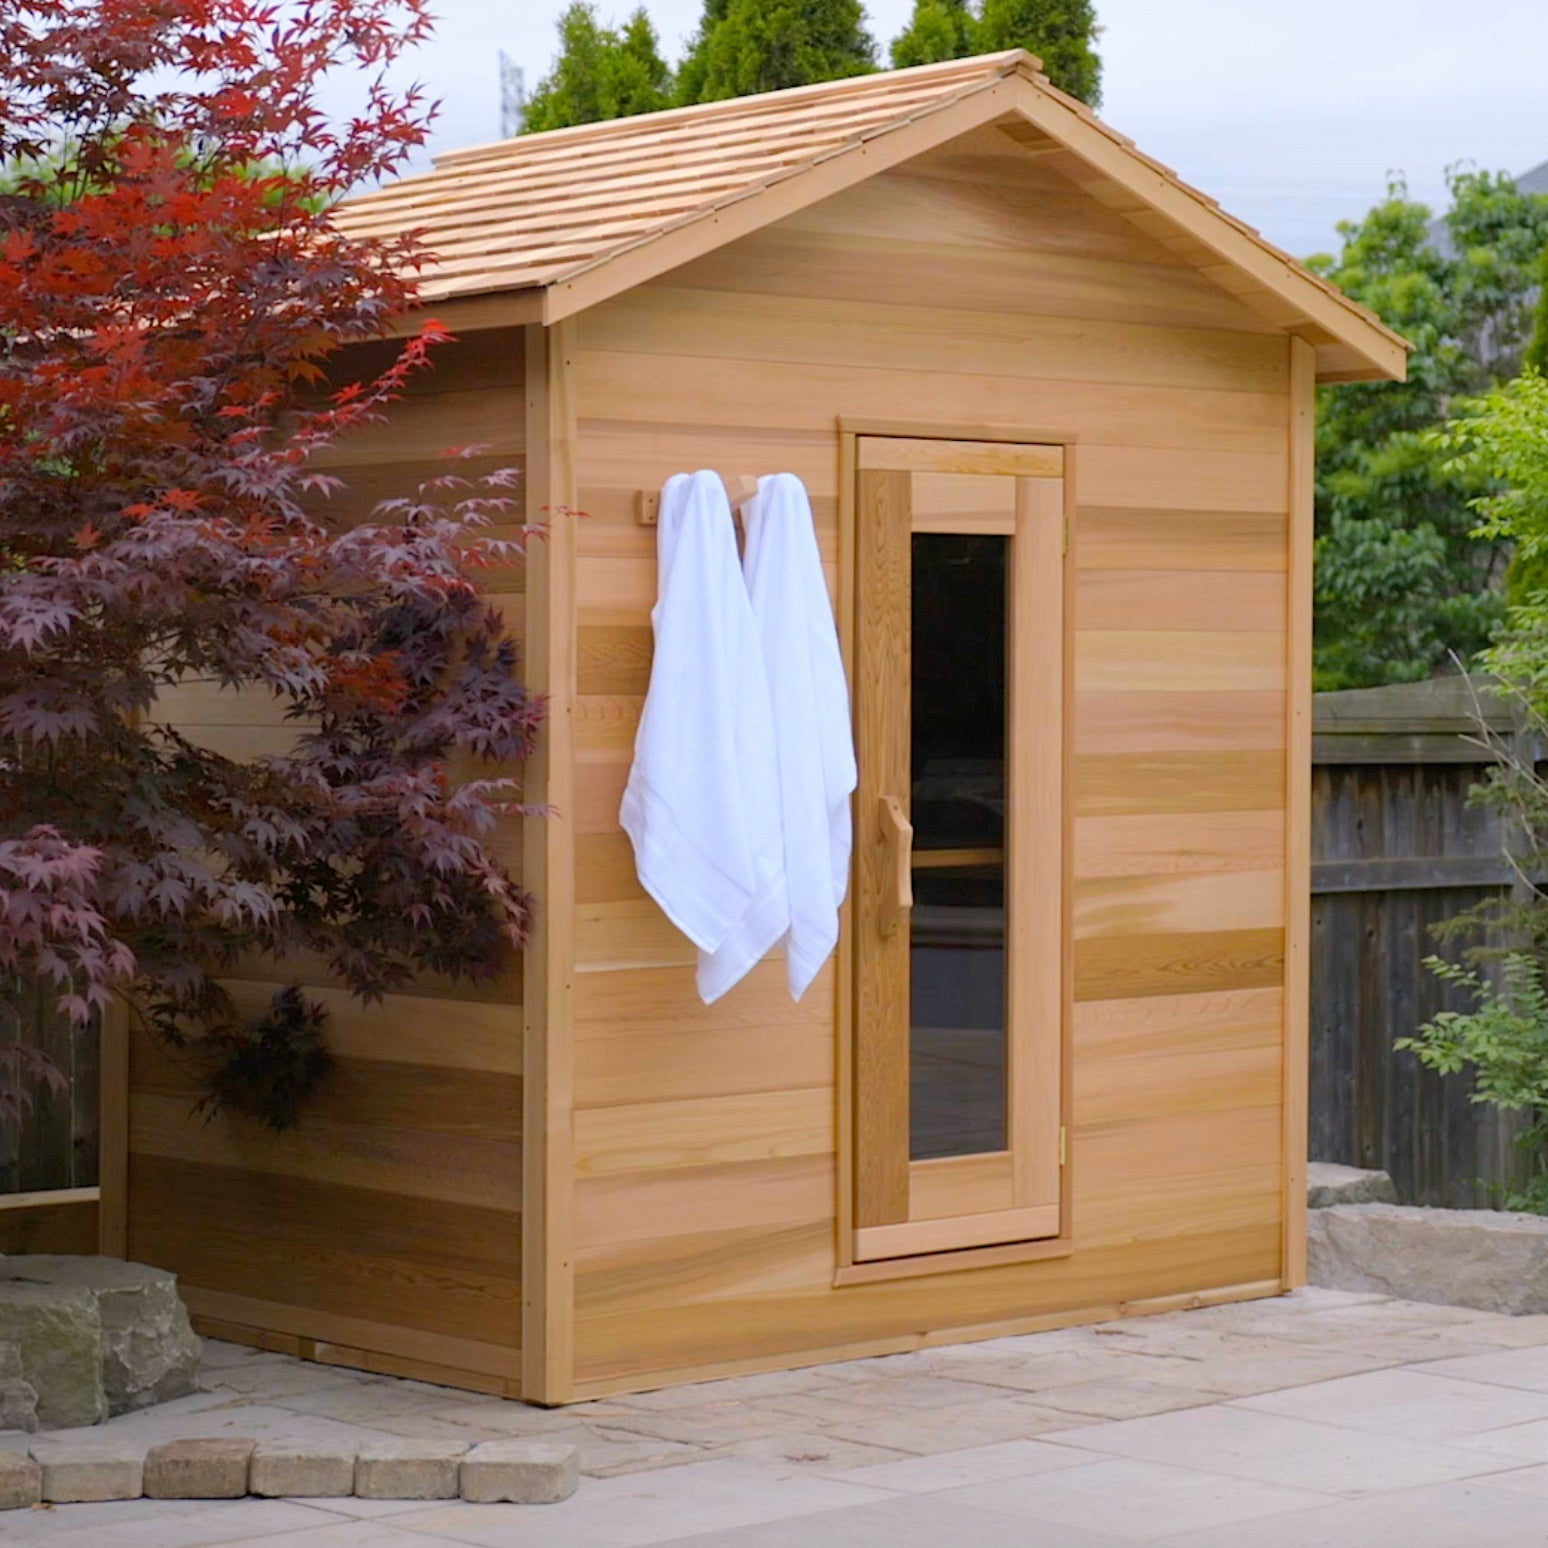 Outdoor Cedar Cabin Sauna has various sizes